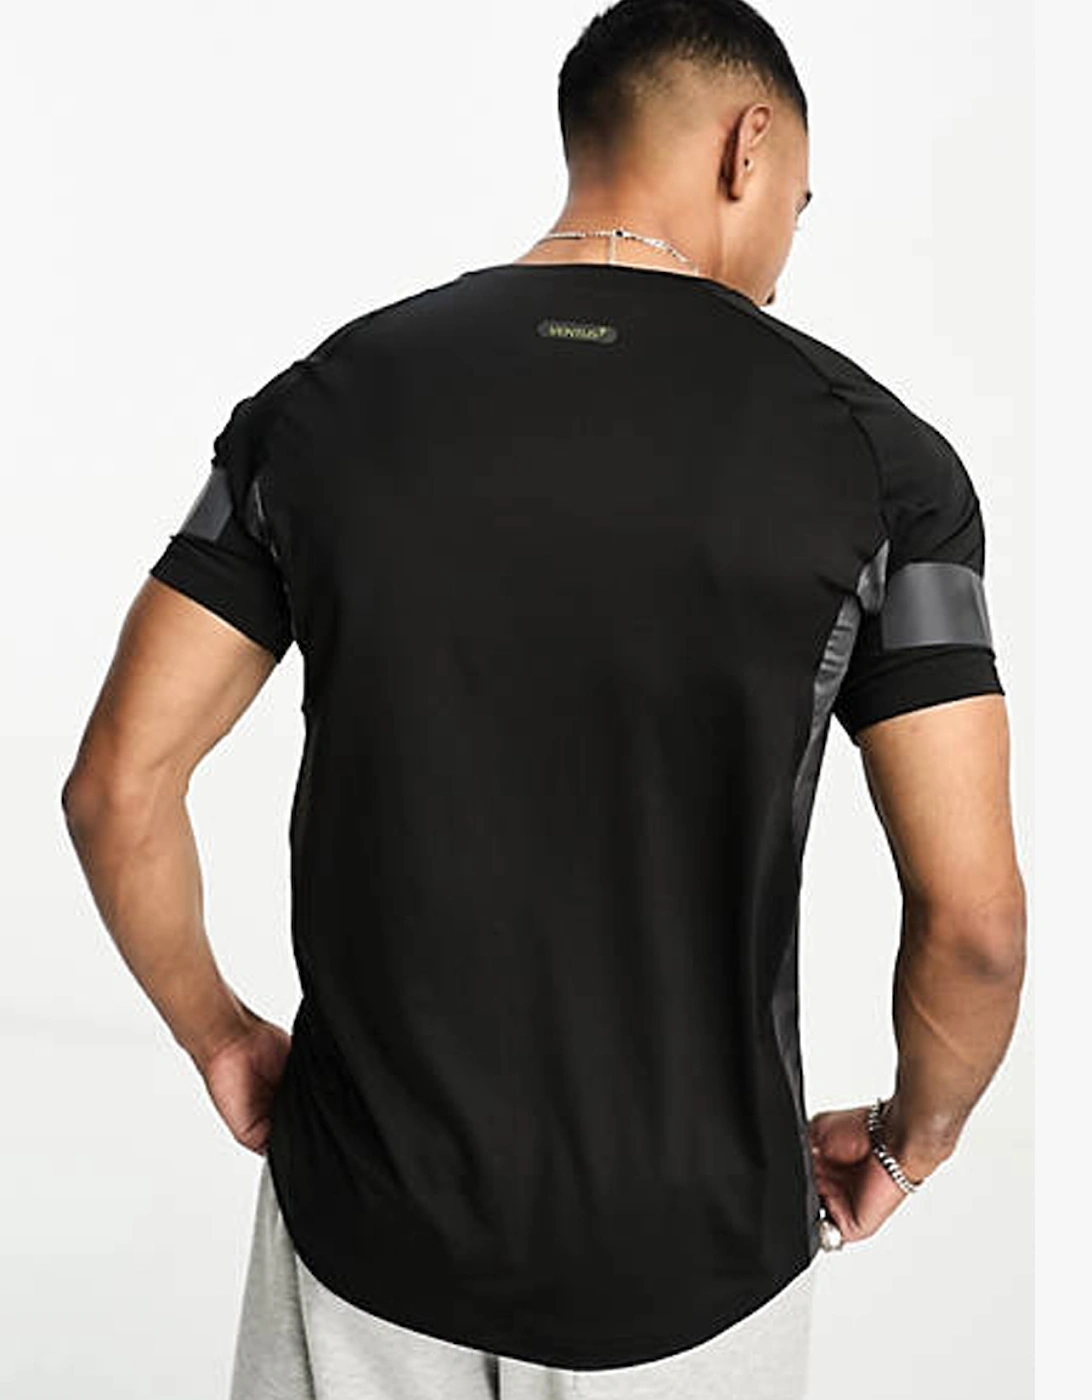 Emporio Armani Ventus7 Athlete T-Shirt - Black/Grey Camo